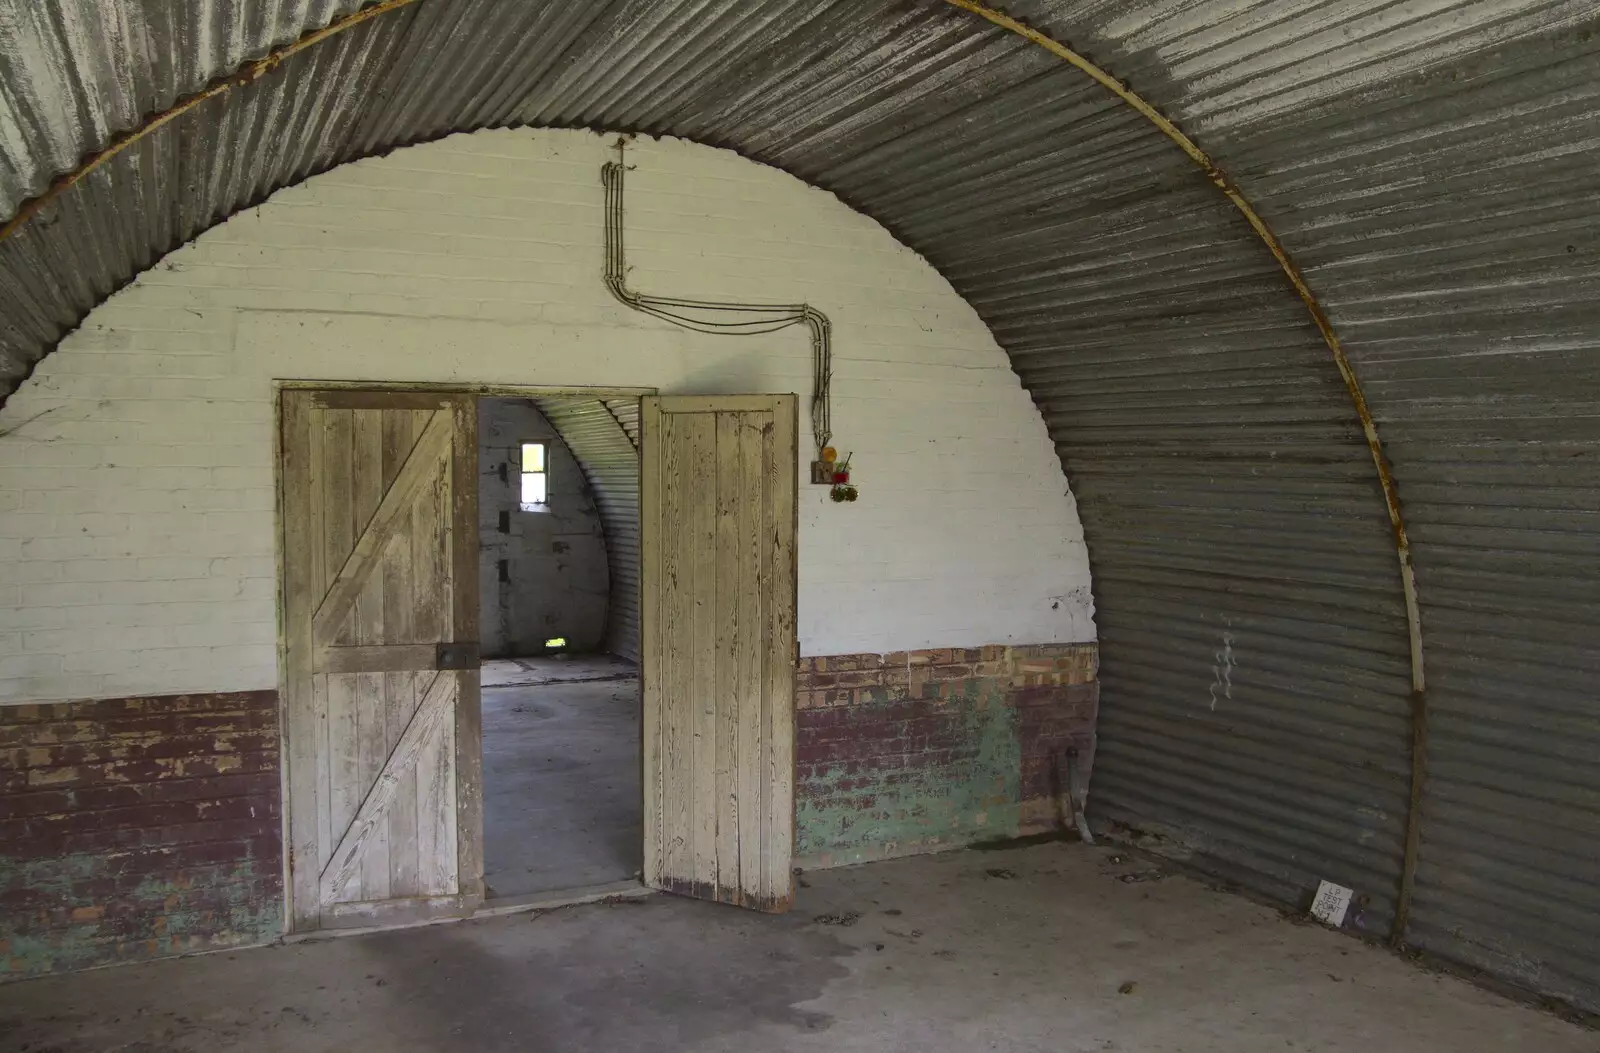 An original Nissen hut, from A 1940s Timewarp, Site 4, Bungay Airfield, Flixton, Suffolk - 9th June 2022